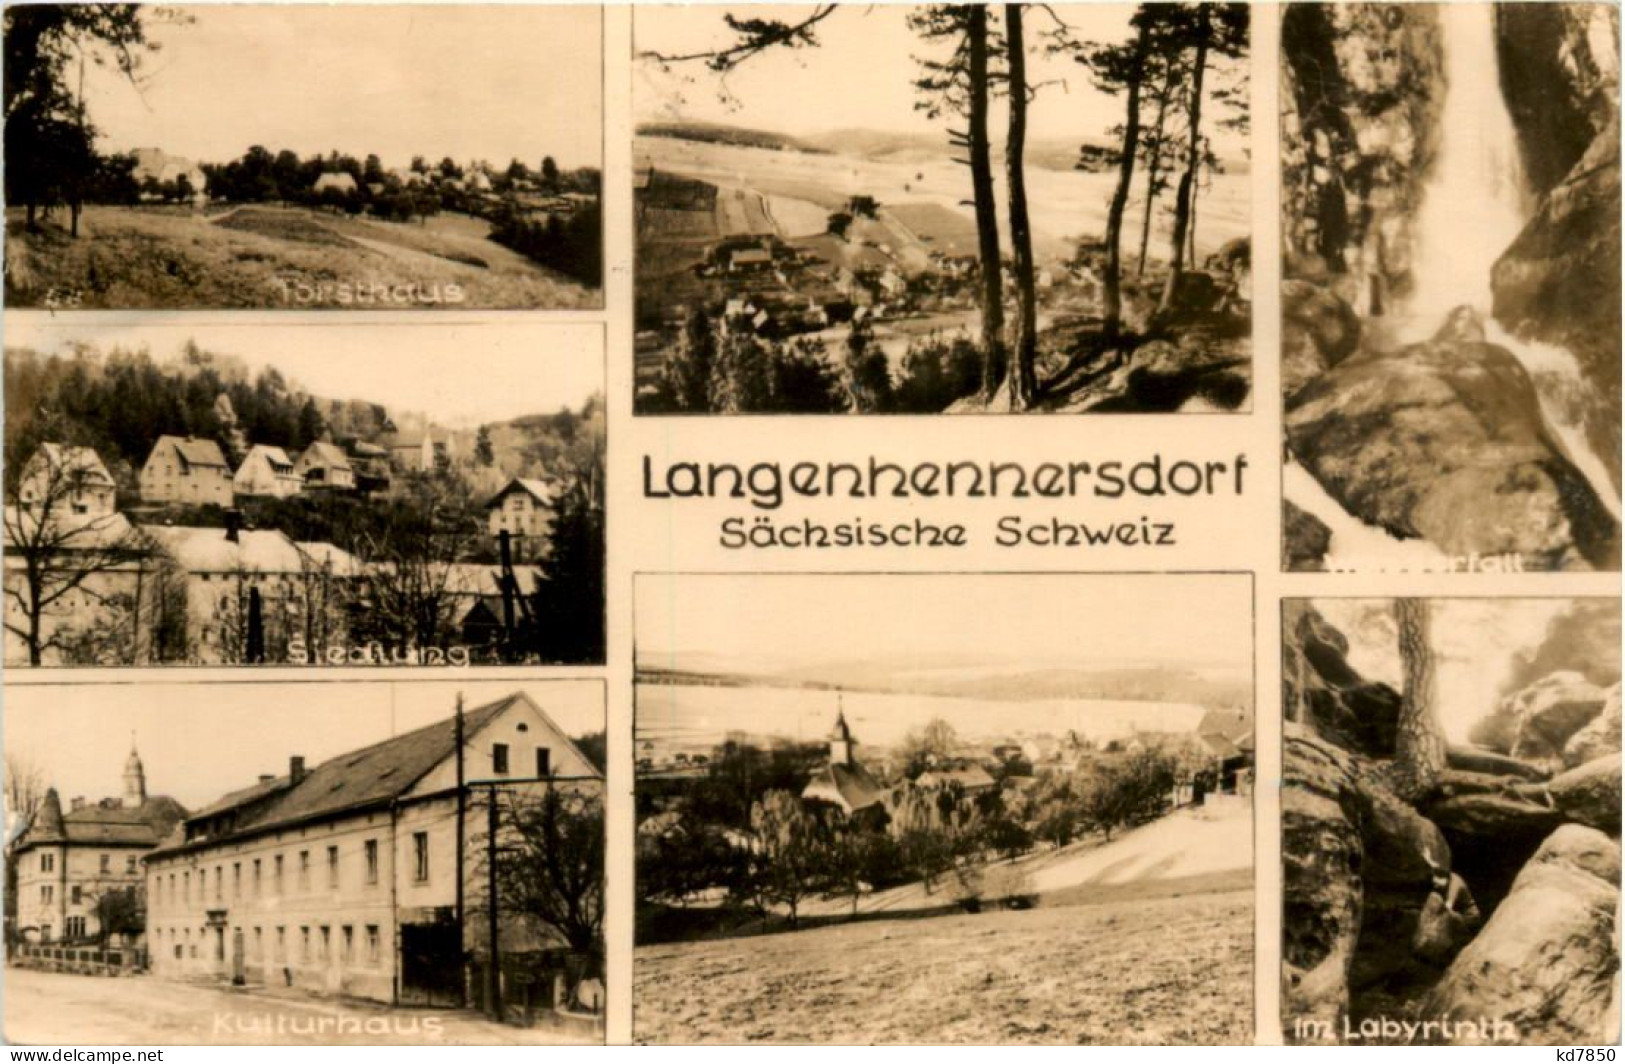 Langenhennersdorf, Sächs.Schweiz, Div. Bilder - Bad Gottleuba-Berggiesshuebel